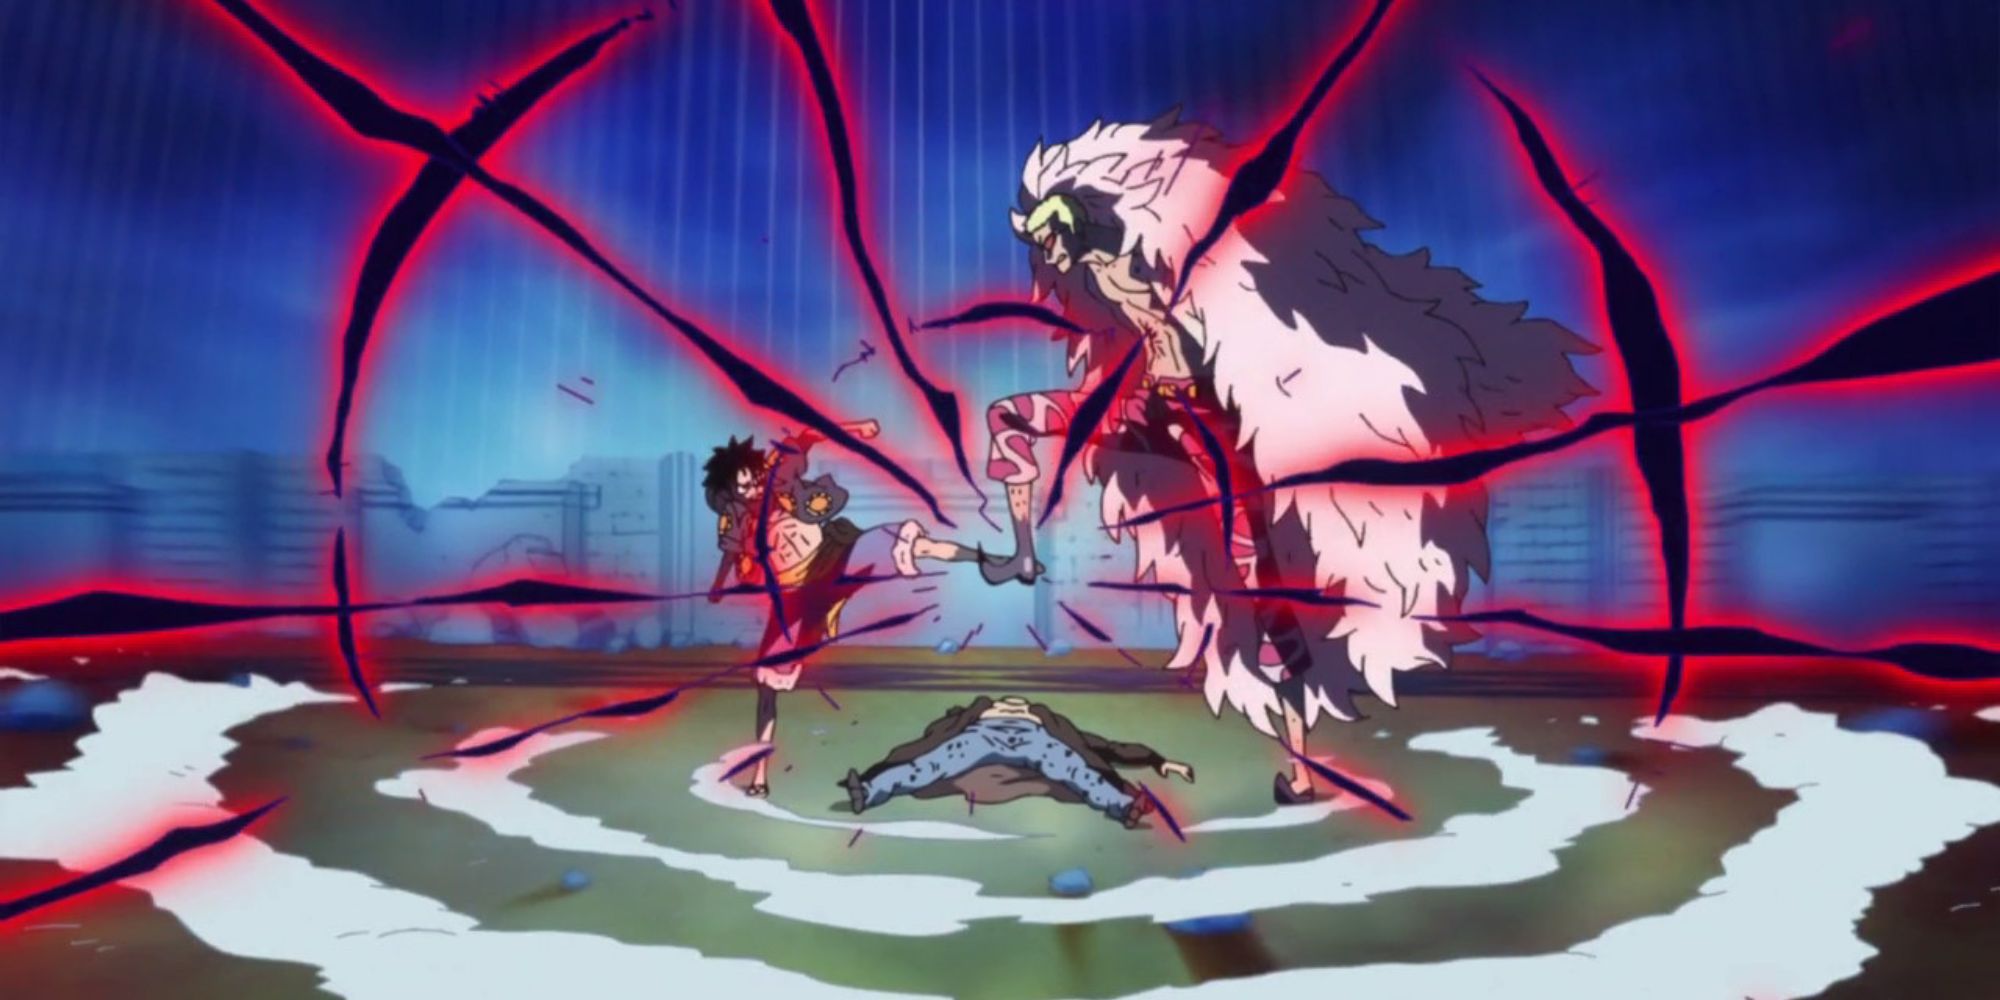 A clash of Conqueror's Haki between Luffy and Doflamingo.